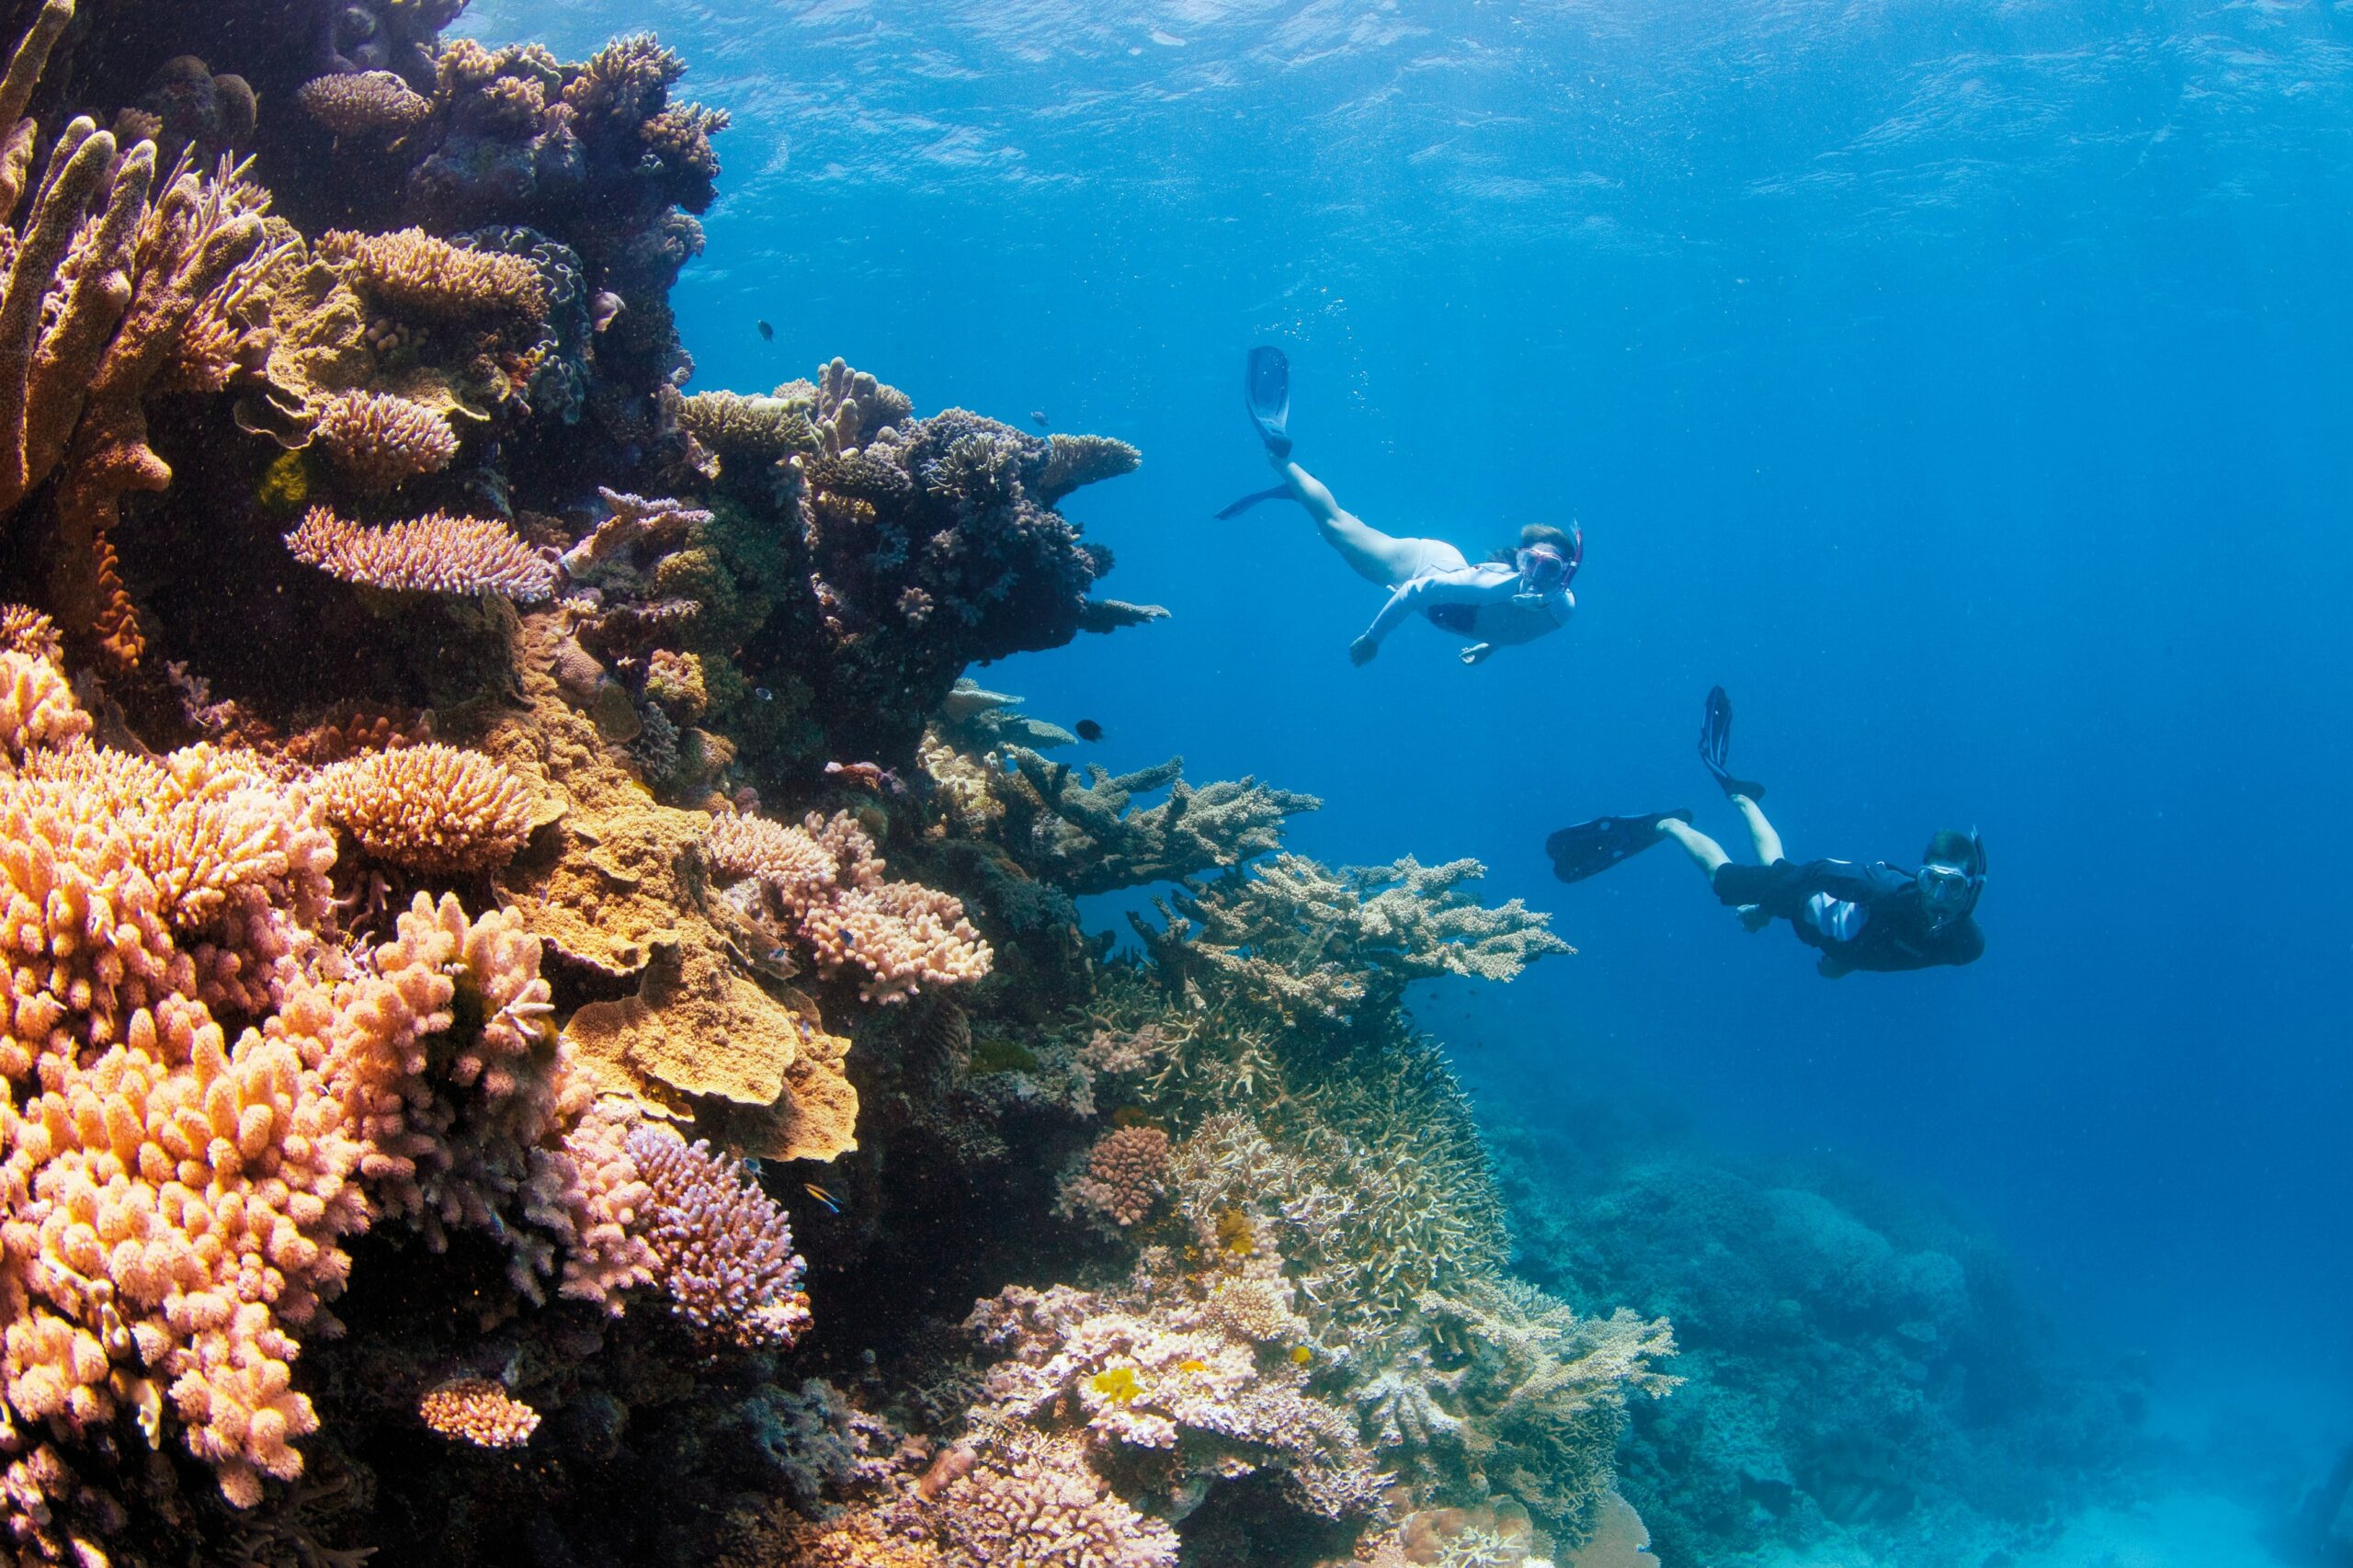 Underwater shot off the Great Barrier Reef